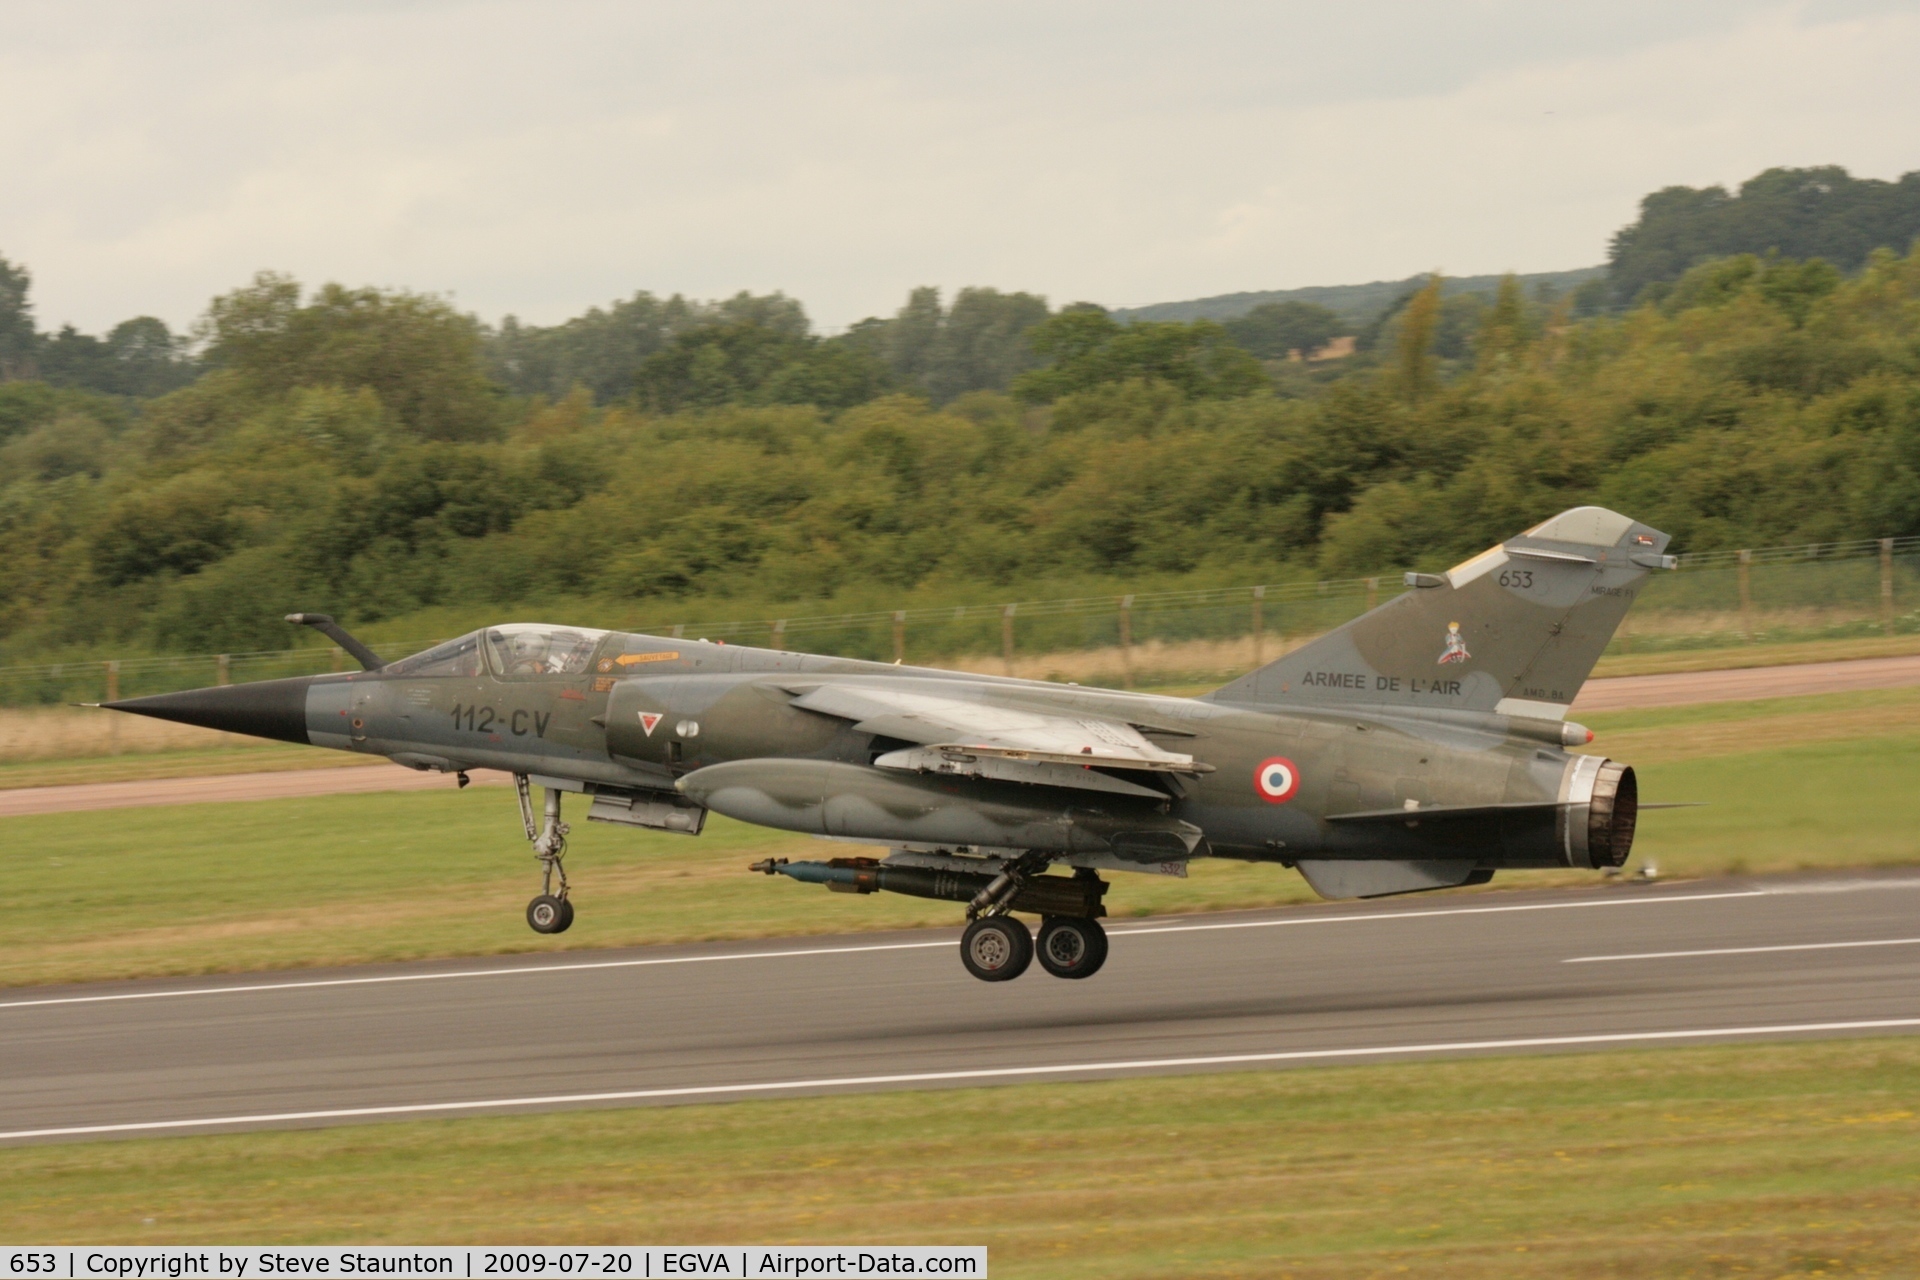 653, Dassault Mirage F.1CR C/N 653, Taken at the Royal International Air Tattoo 2009